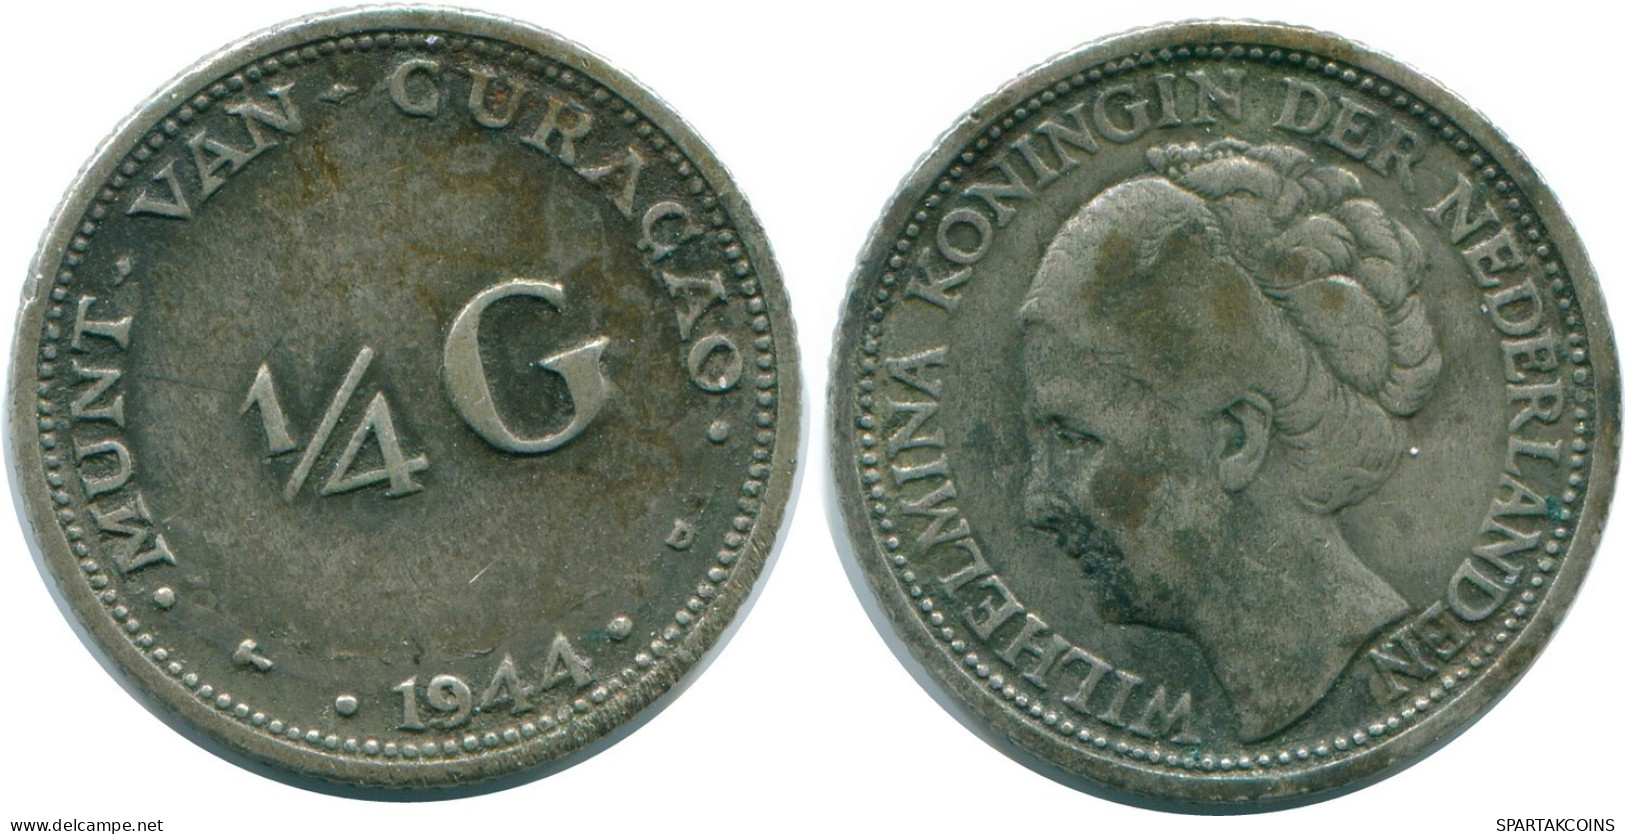 1/4 GULDEN 1944 CURACAO Netherlands SILVER Colonial Coin #NL10590.4.U.A - Curaçao